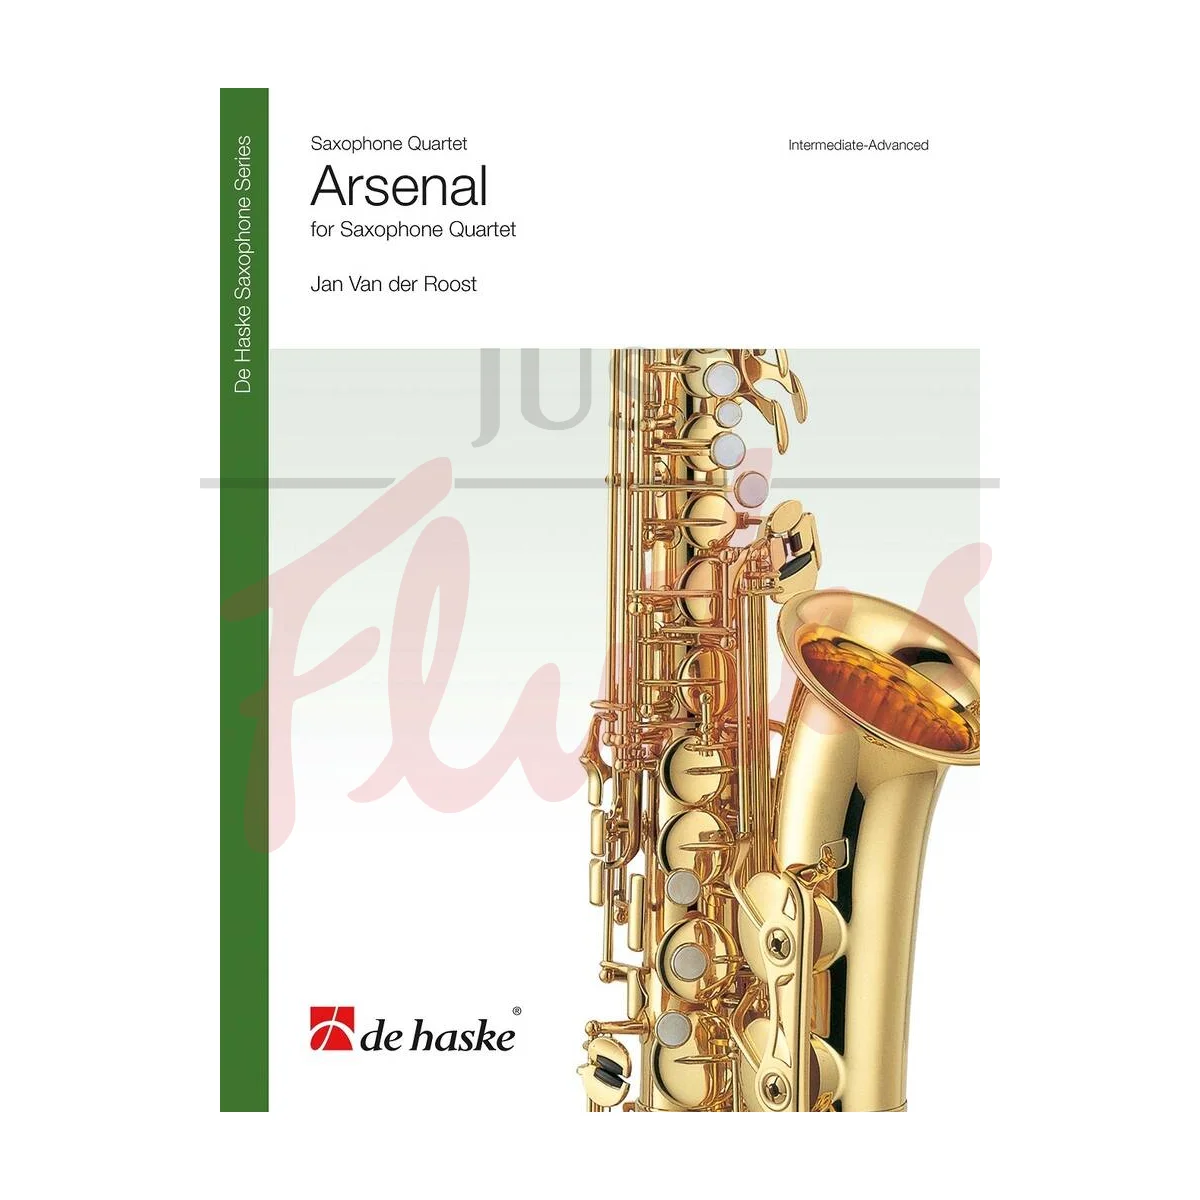 Arsenal for Saxophone Quartet